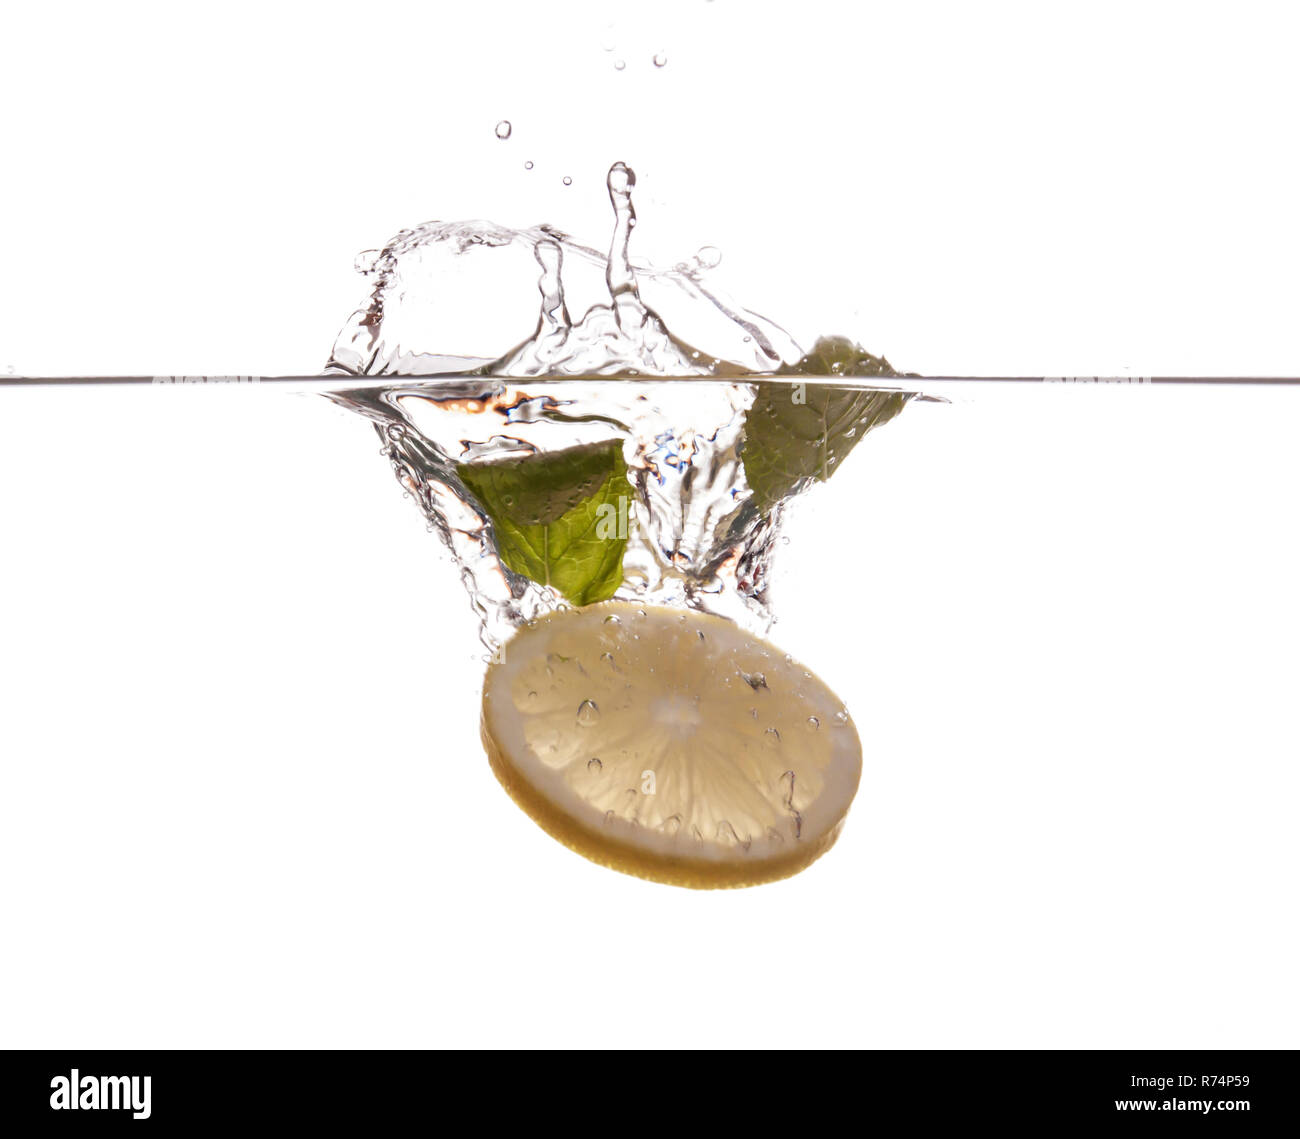 Lemon slice and mint sinking underwater Stock Photo